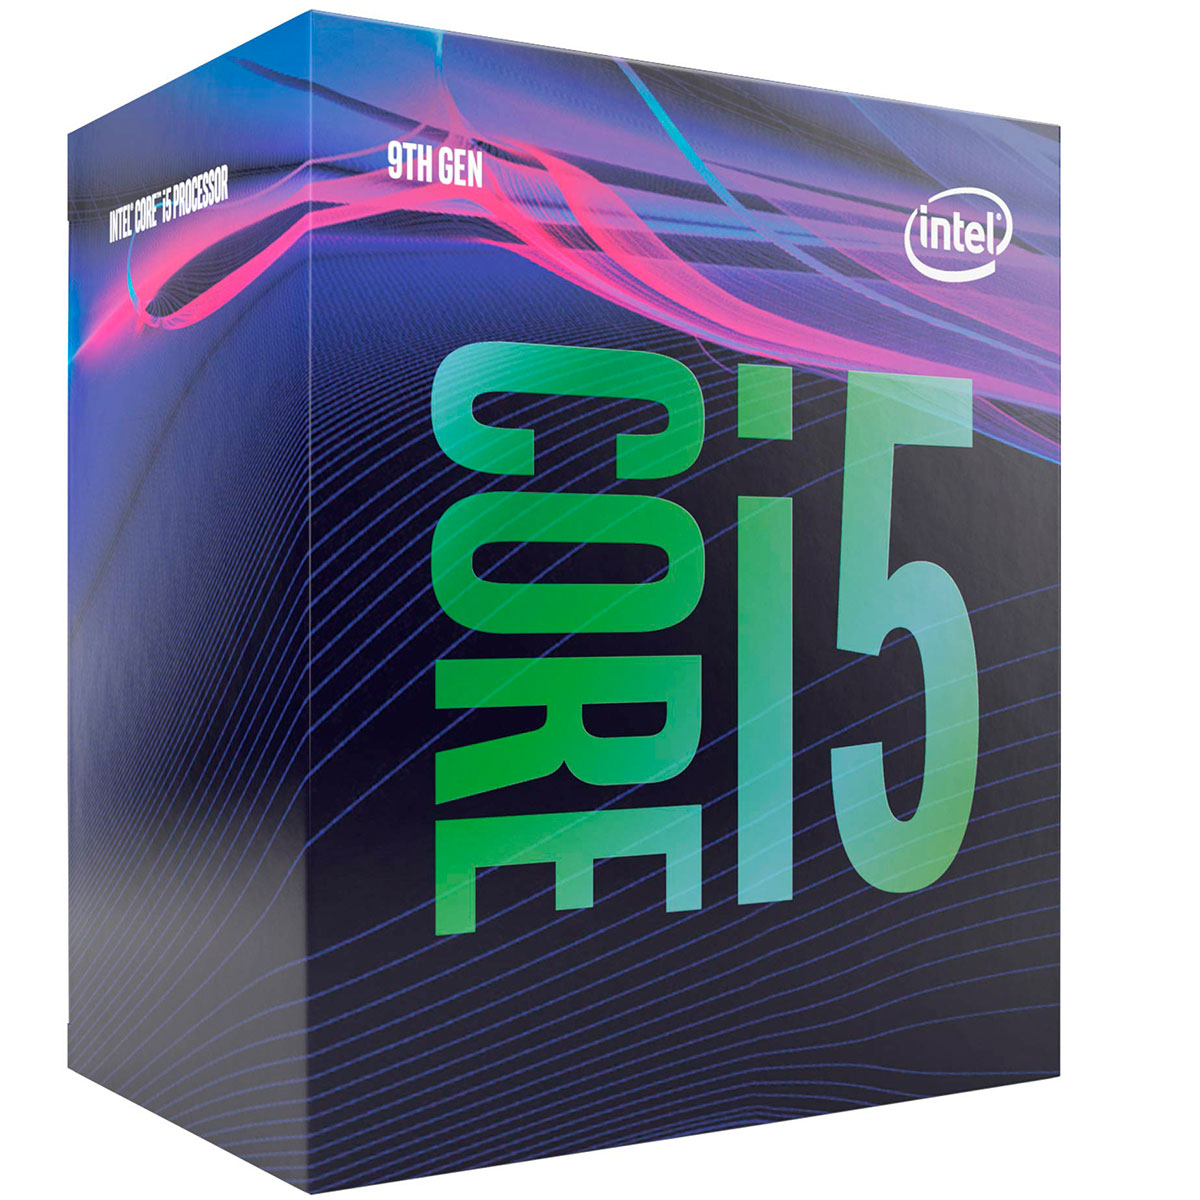 Intel® Core i5 9500F - LGA 1151 - Hexa Core - 3.0GHz (Turbo 4.4GHz) - Cache 9MB - 9ª Geração - BX80684I59500F